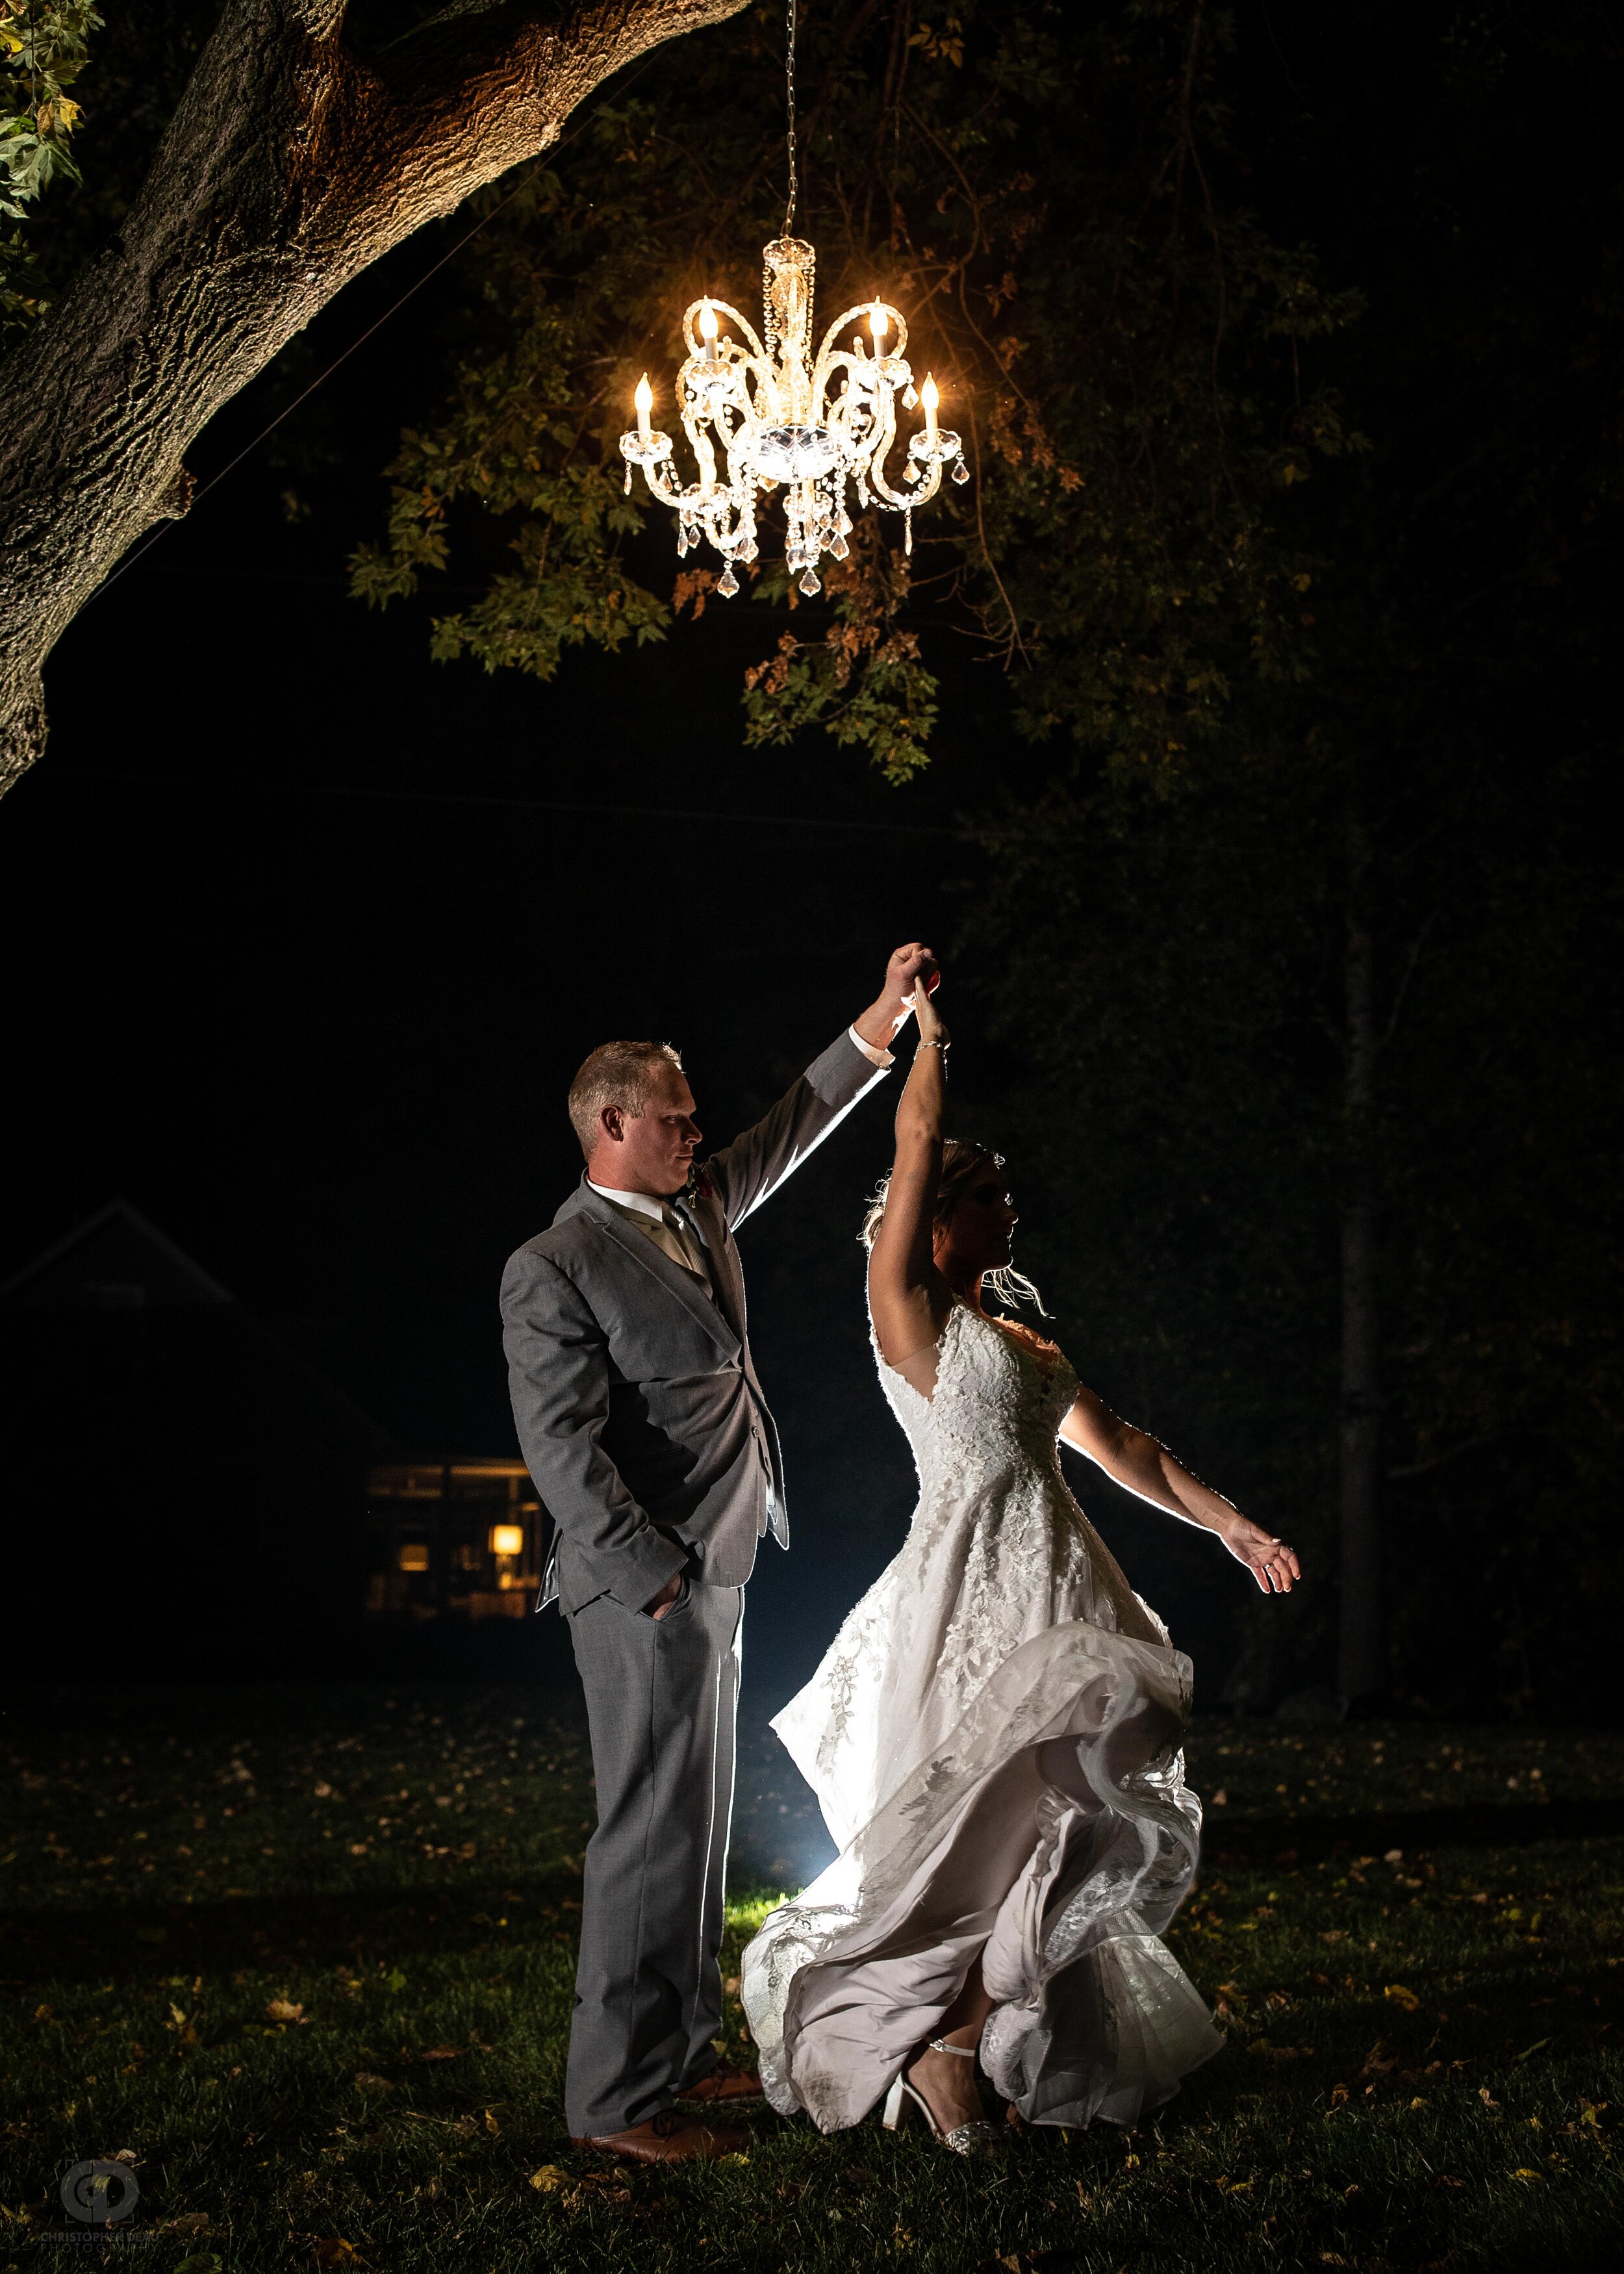  bride and groom twirl under chandelier in the dark 